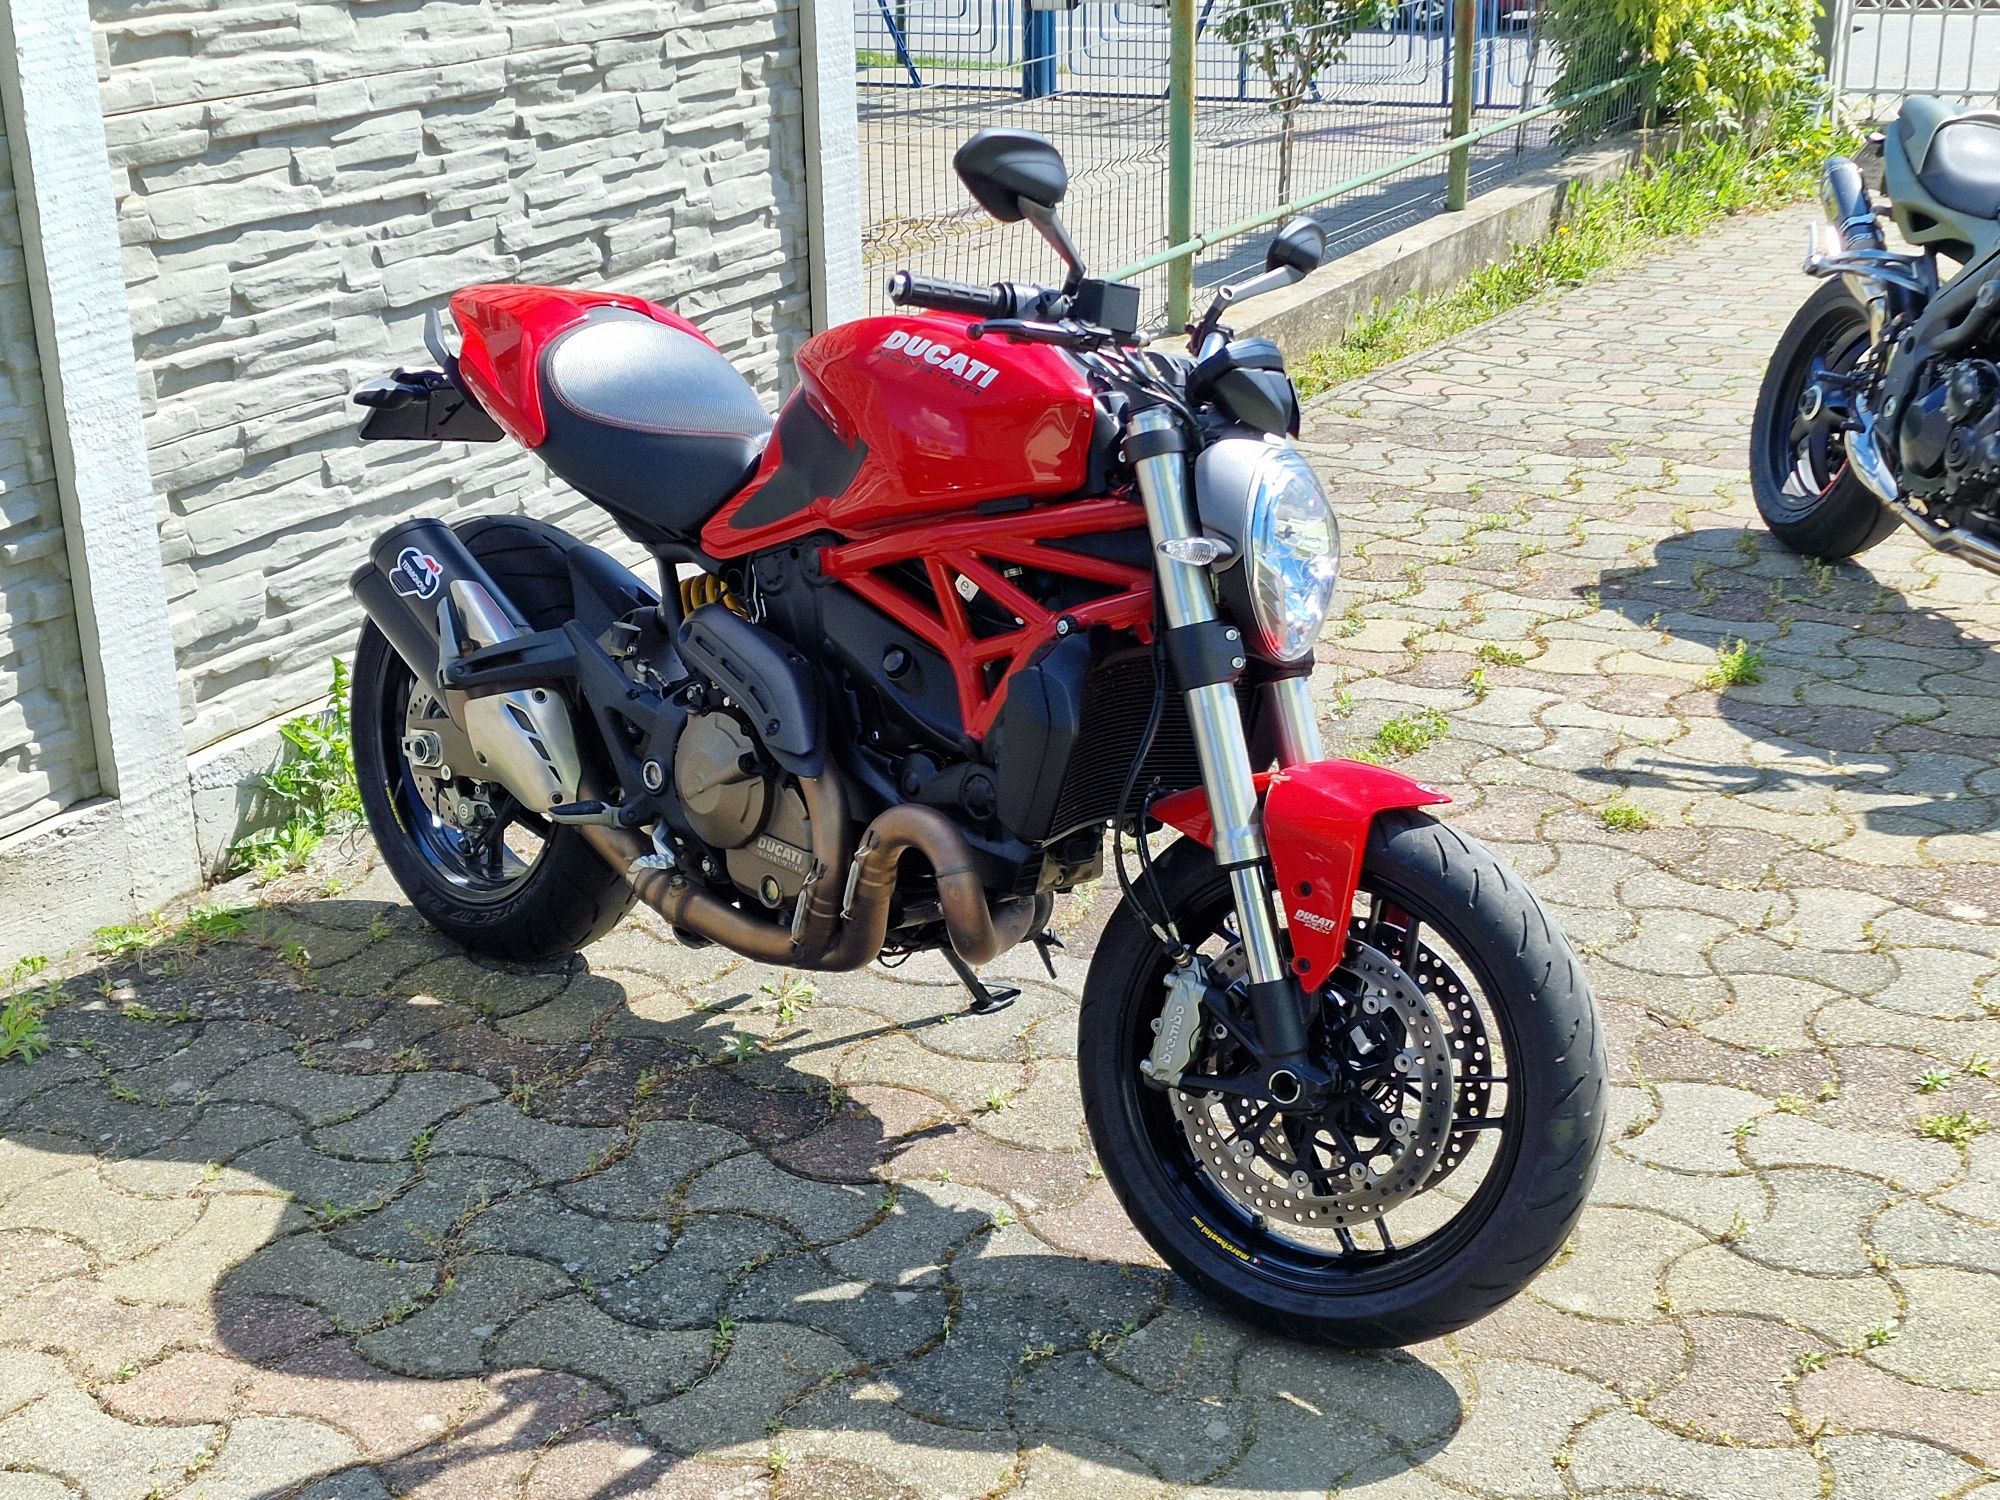 Ducati monster 821 ,cu 18000 km ,115 cp cu
ABS,Traction control .Toate